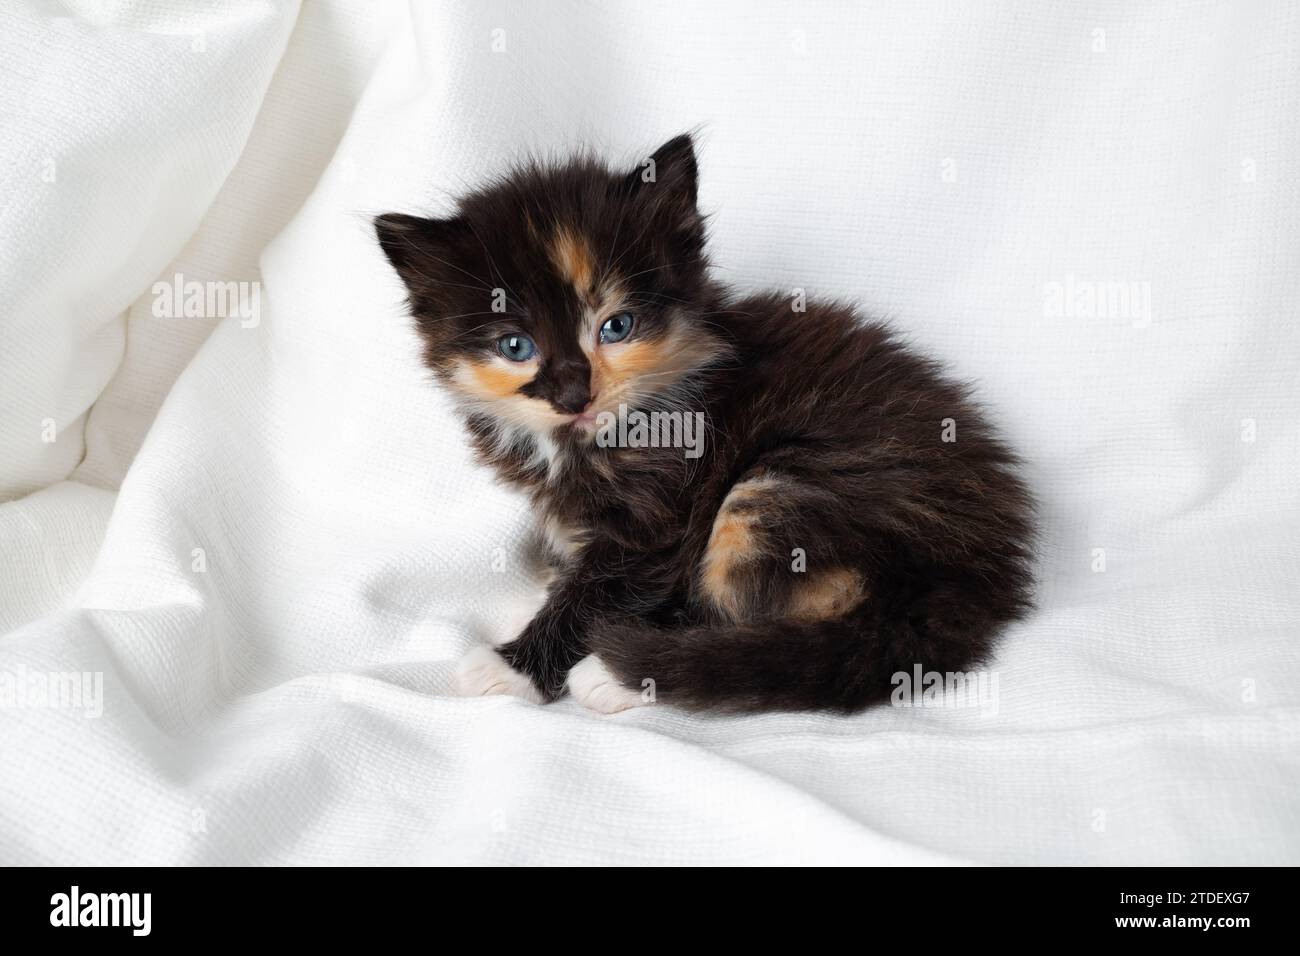 Cute tortoiseshell kitten cat sitting on white sheet background. Stock Photo